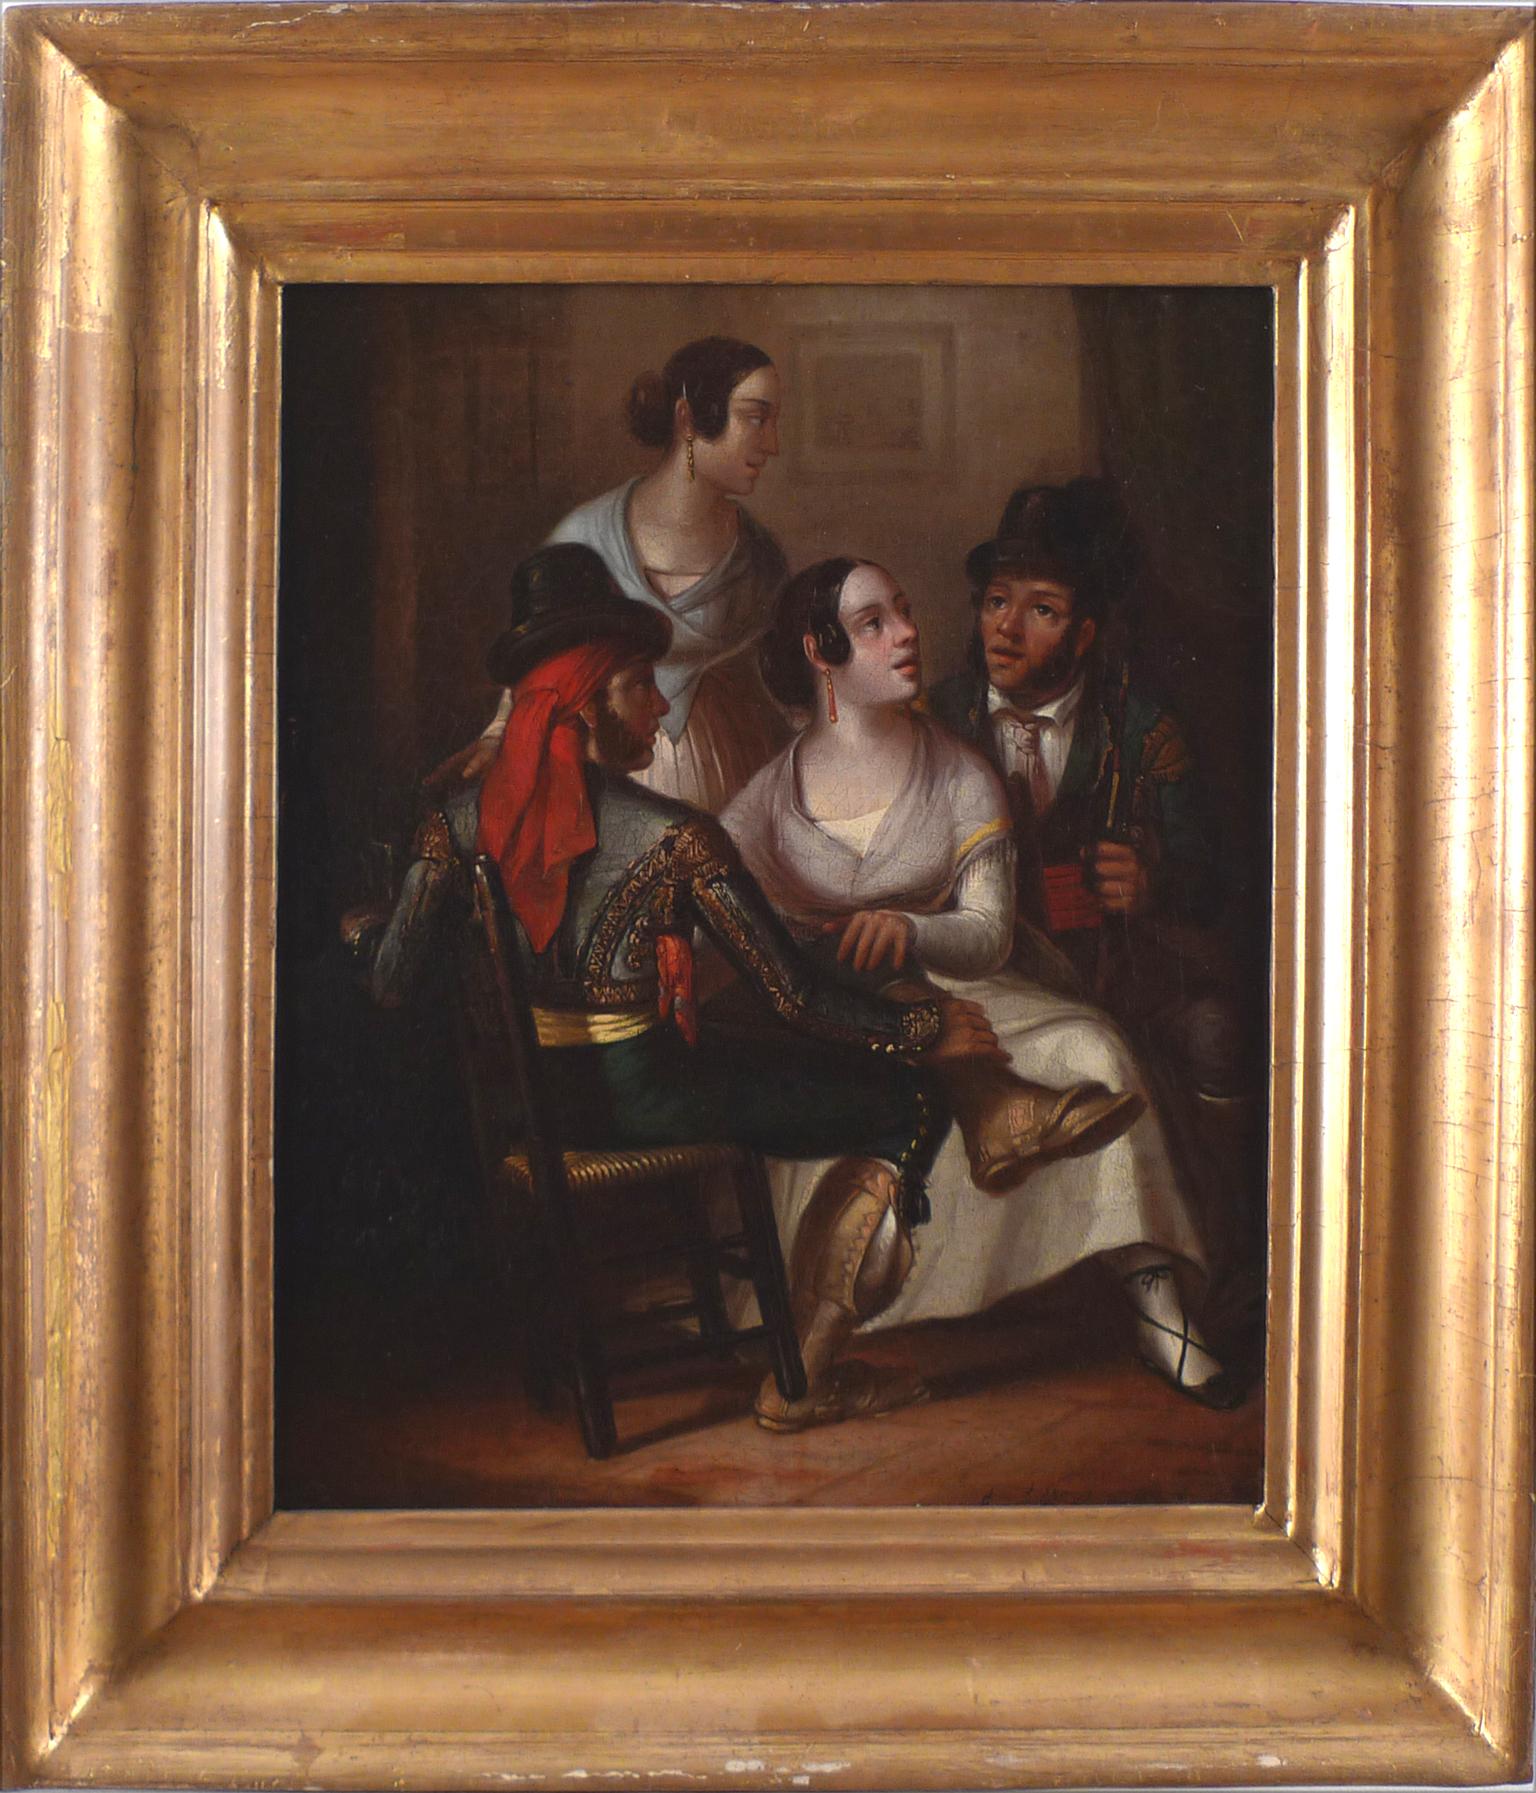 ÁNGEL MARÍA CORTELLINI
Spanish, 1819 - 1887
CONVERSANDO
signed "Cortellini" (lower right)
oil on canvas
13-1/4 x 11 inches (33.5 x 28 cm.)
framed: 17-1/4 x 15 (44 x 38 cm.)

Ángel María Cortellini. Sanlúcar de Barrameda (Cádiz), 27.09.1819 – Madrid,